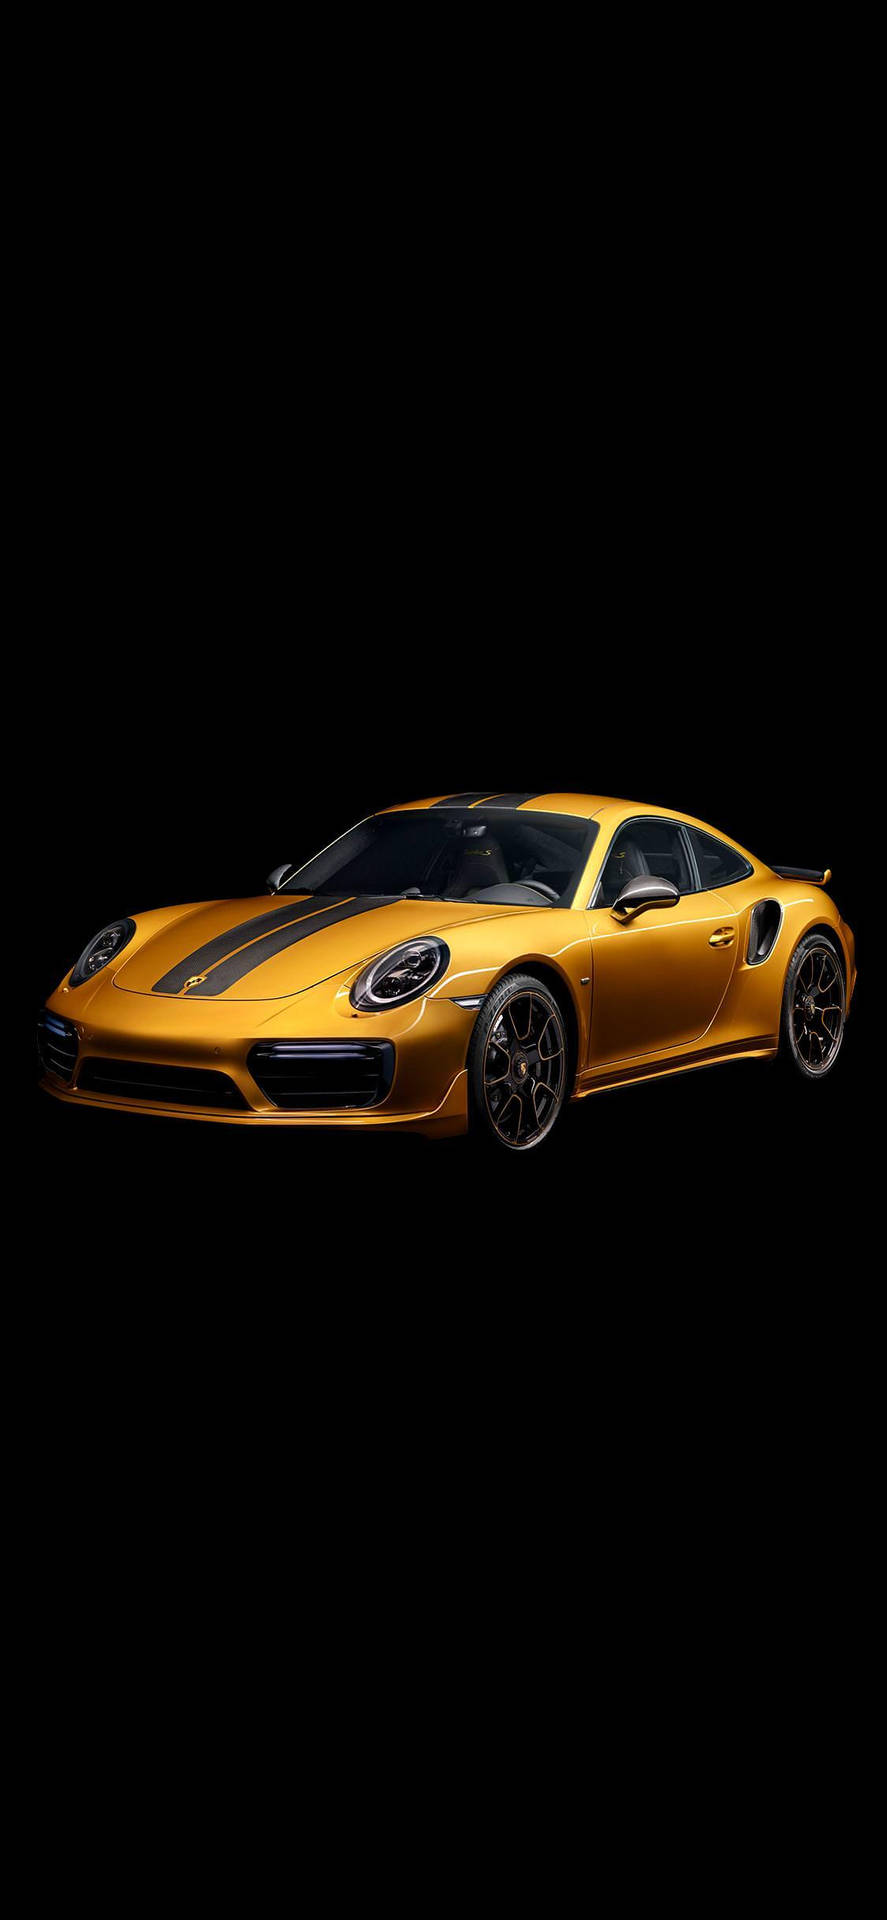 iPhone X Car Porsche Turbo S Wallpaper